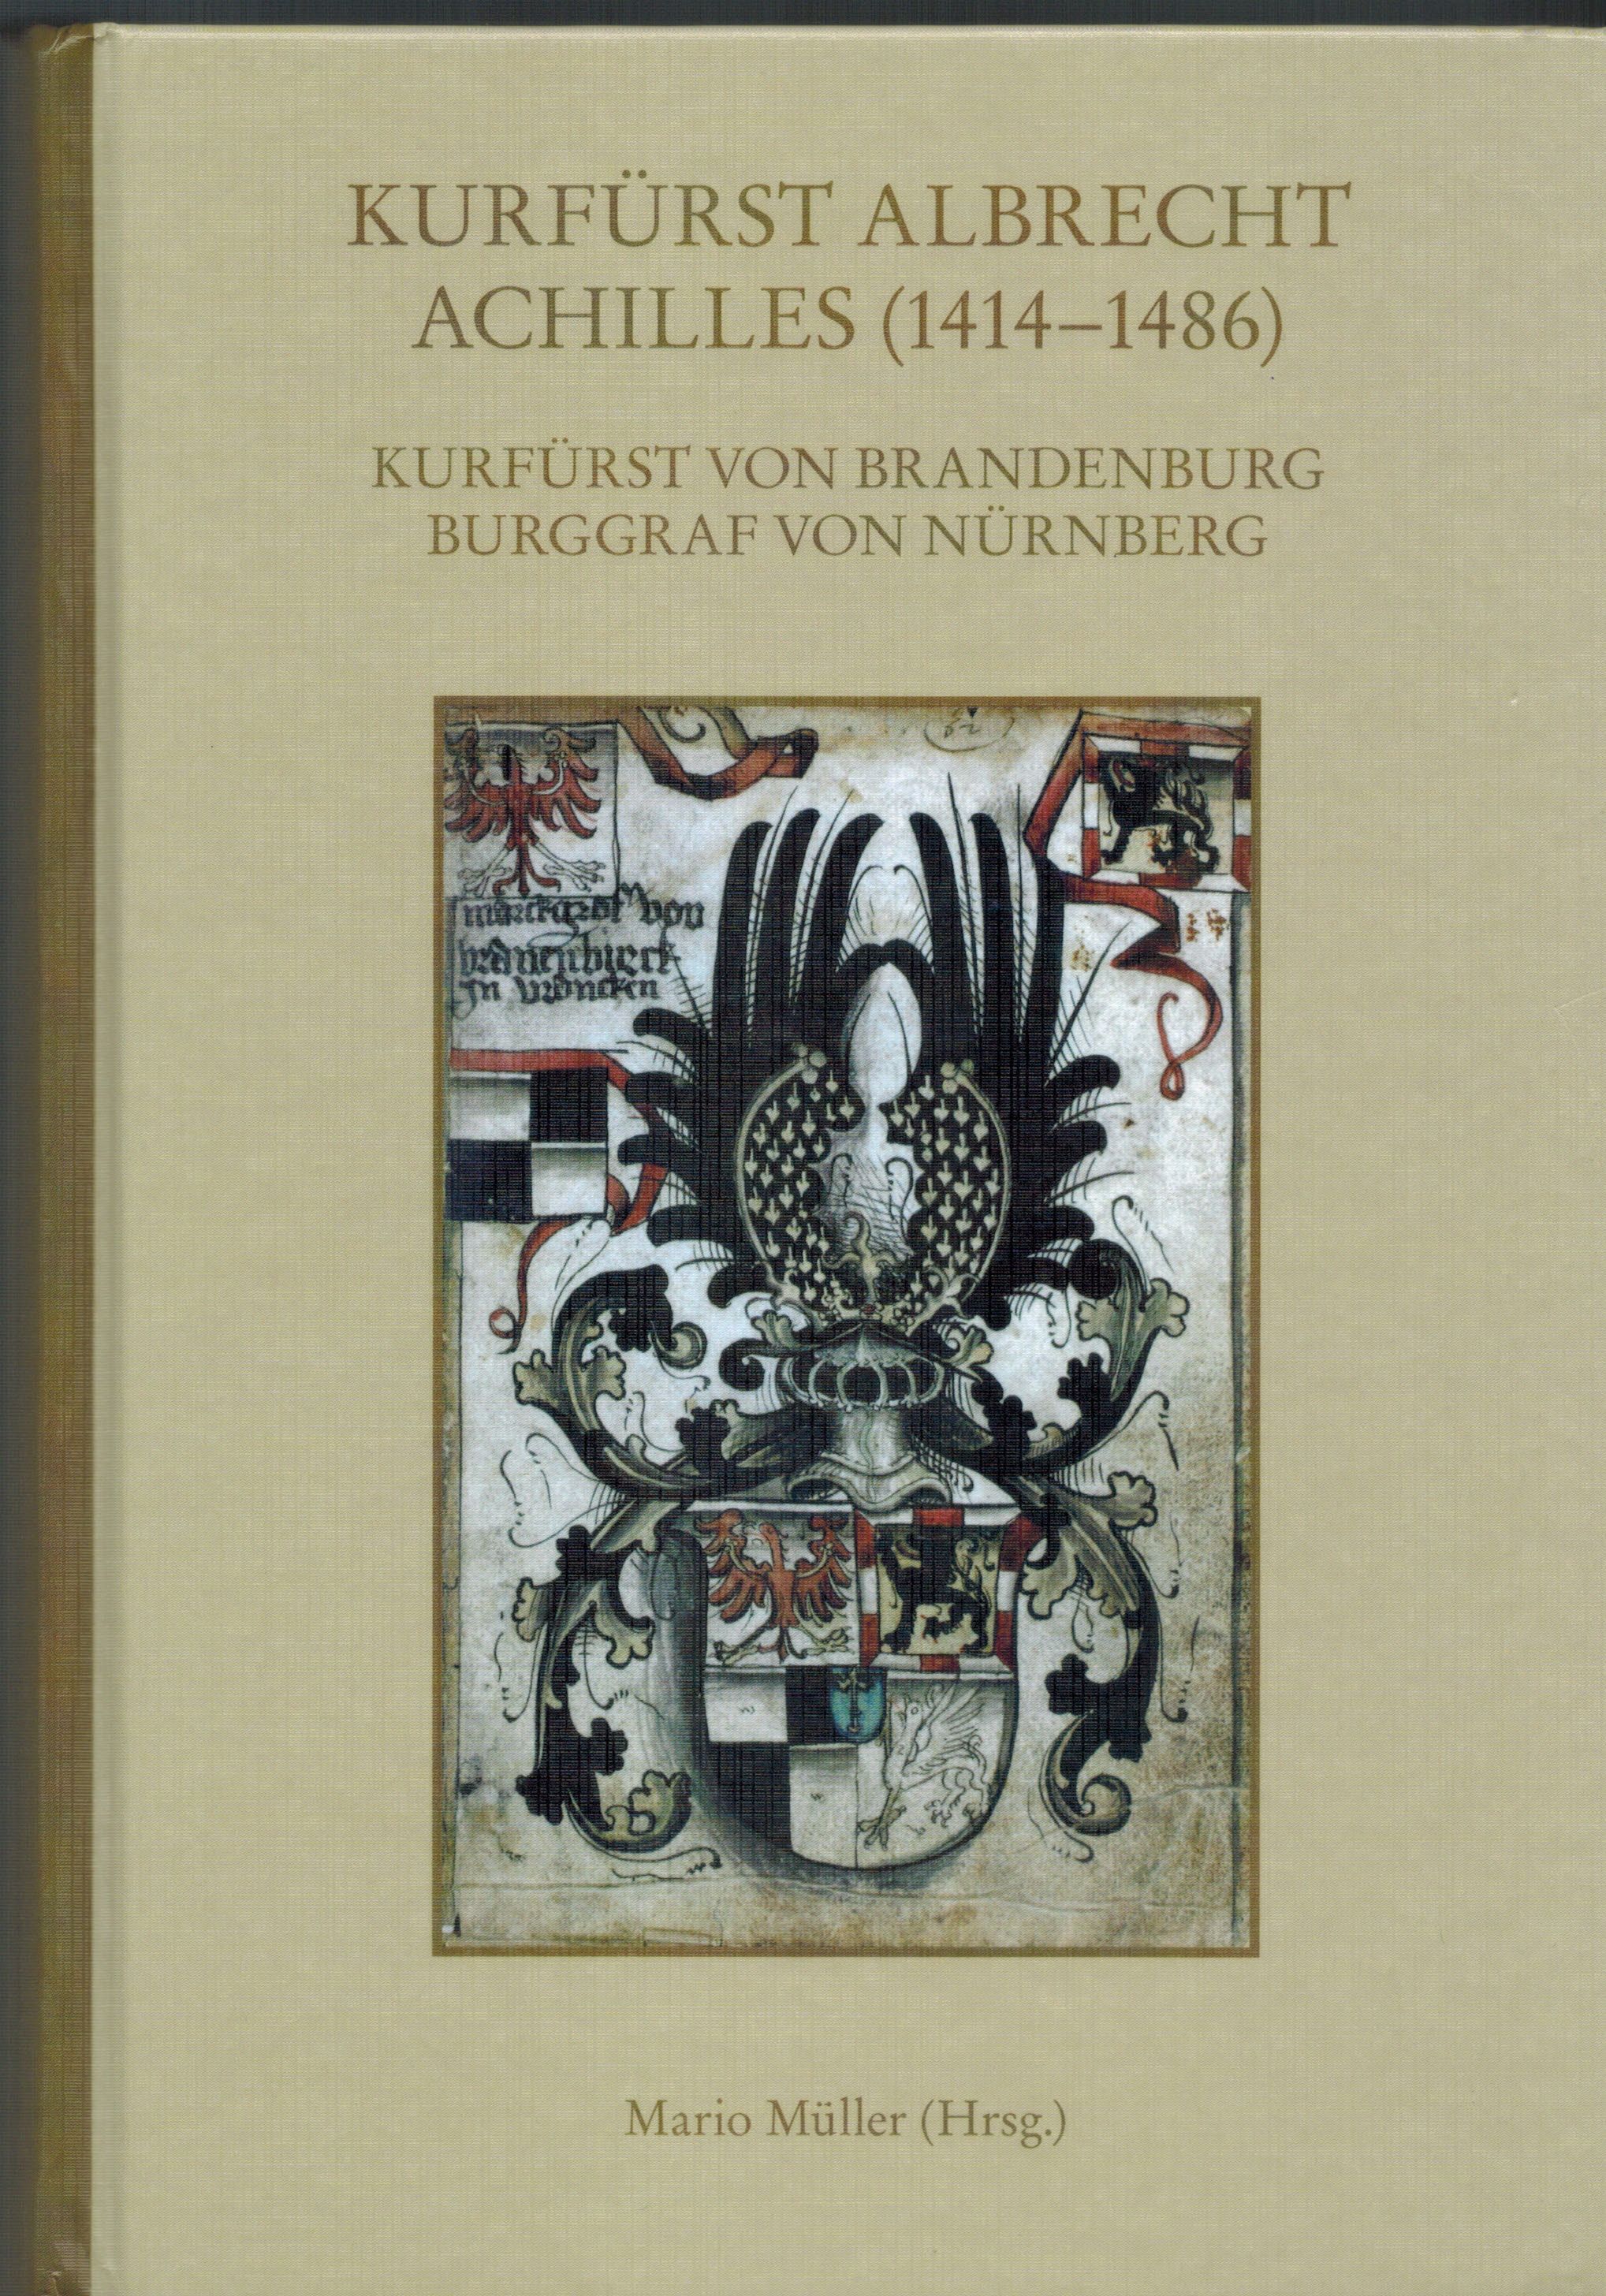 Kurfürst Albrecht Achilles (1414-1486)